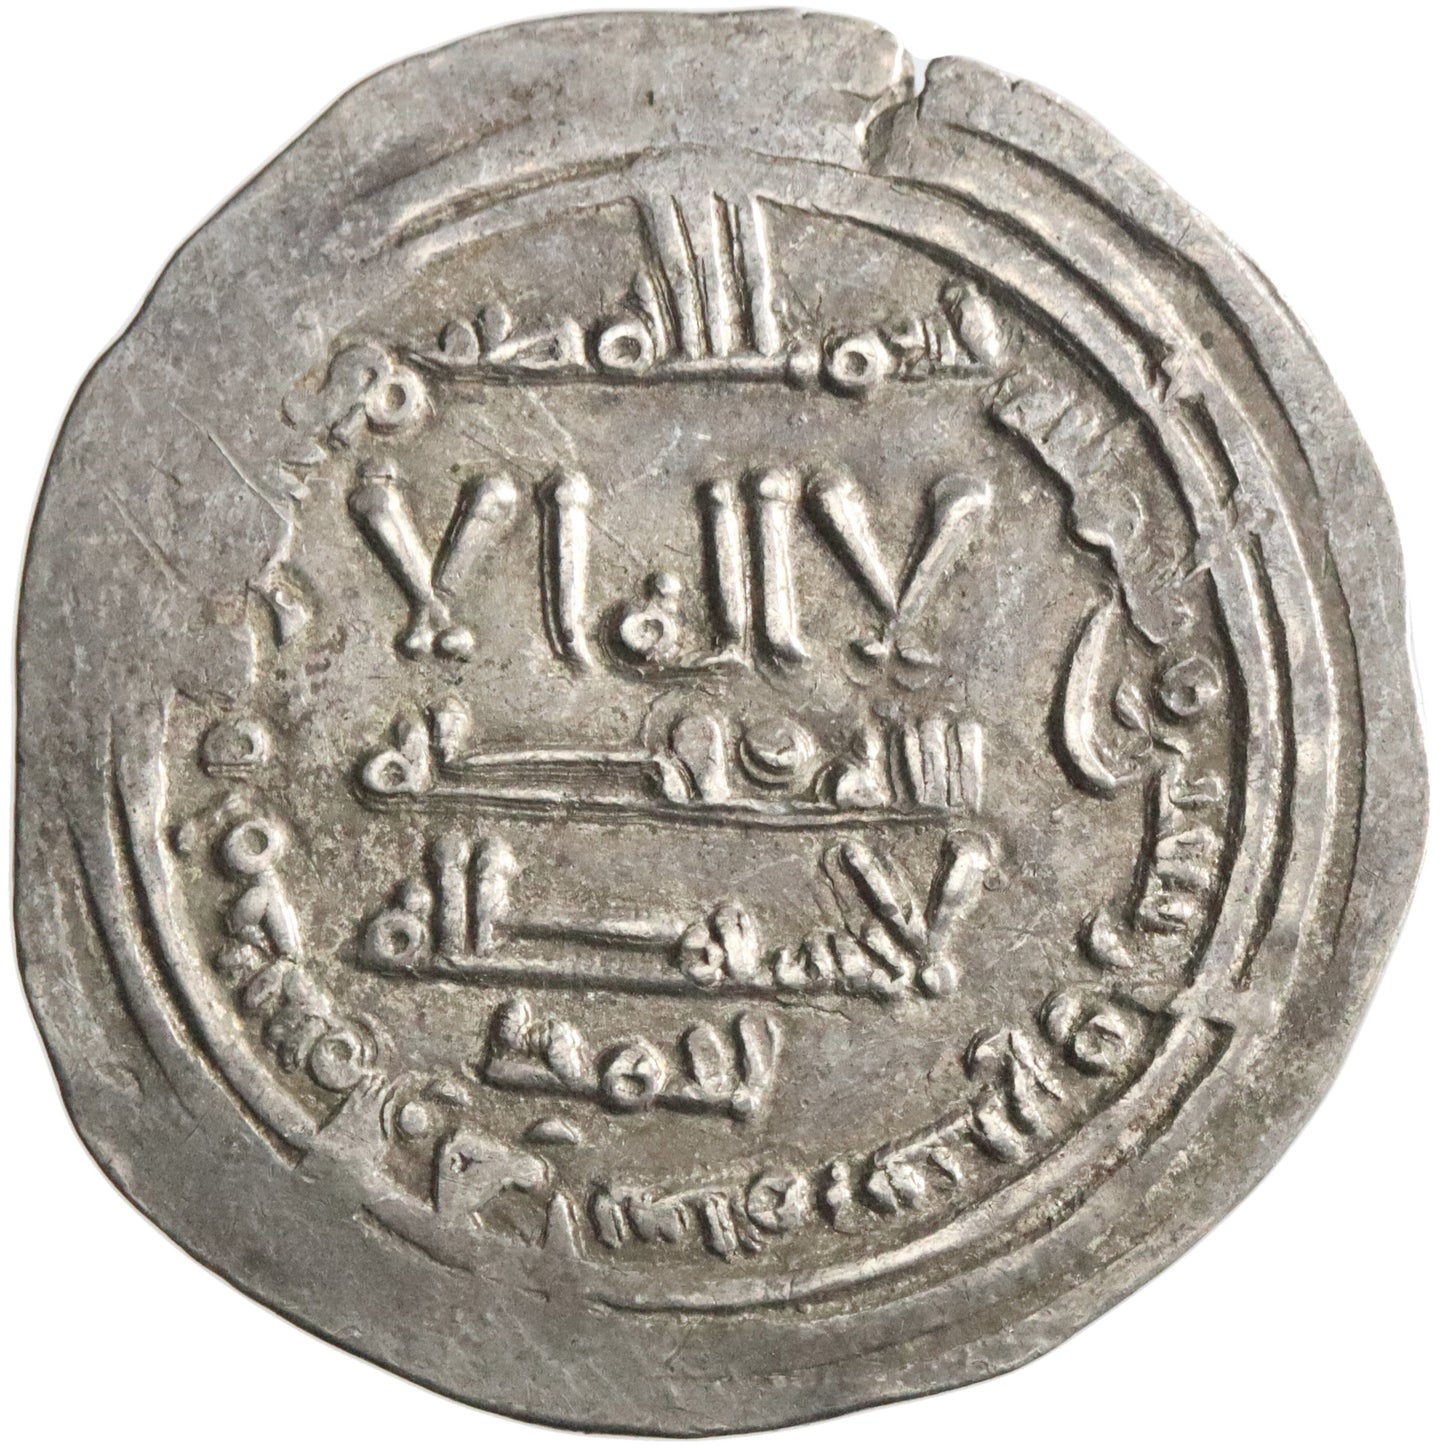 Umayyad of Spain, 'Abd al-Rahman III, silver dirham, Madinat al-Zahra mint, AH 347, citing Ahmad